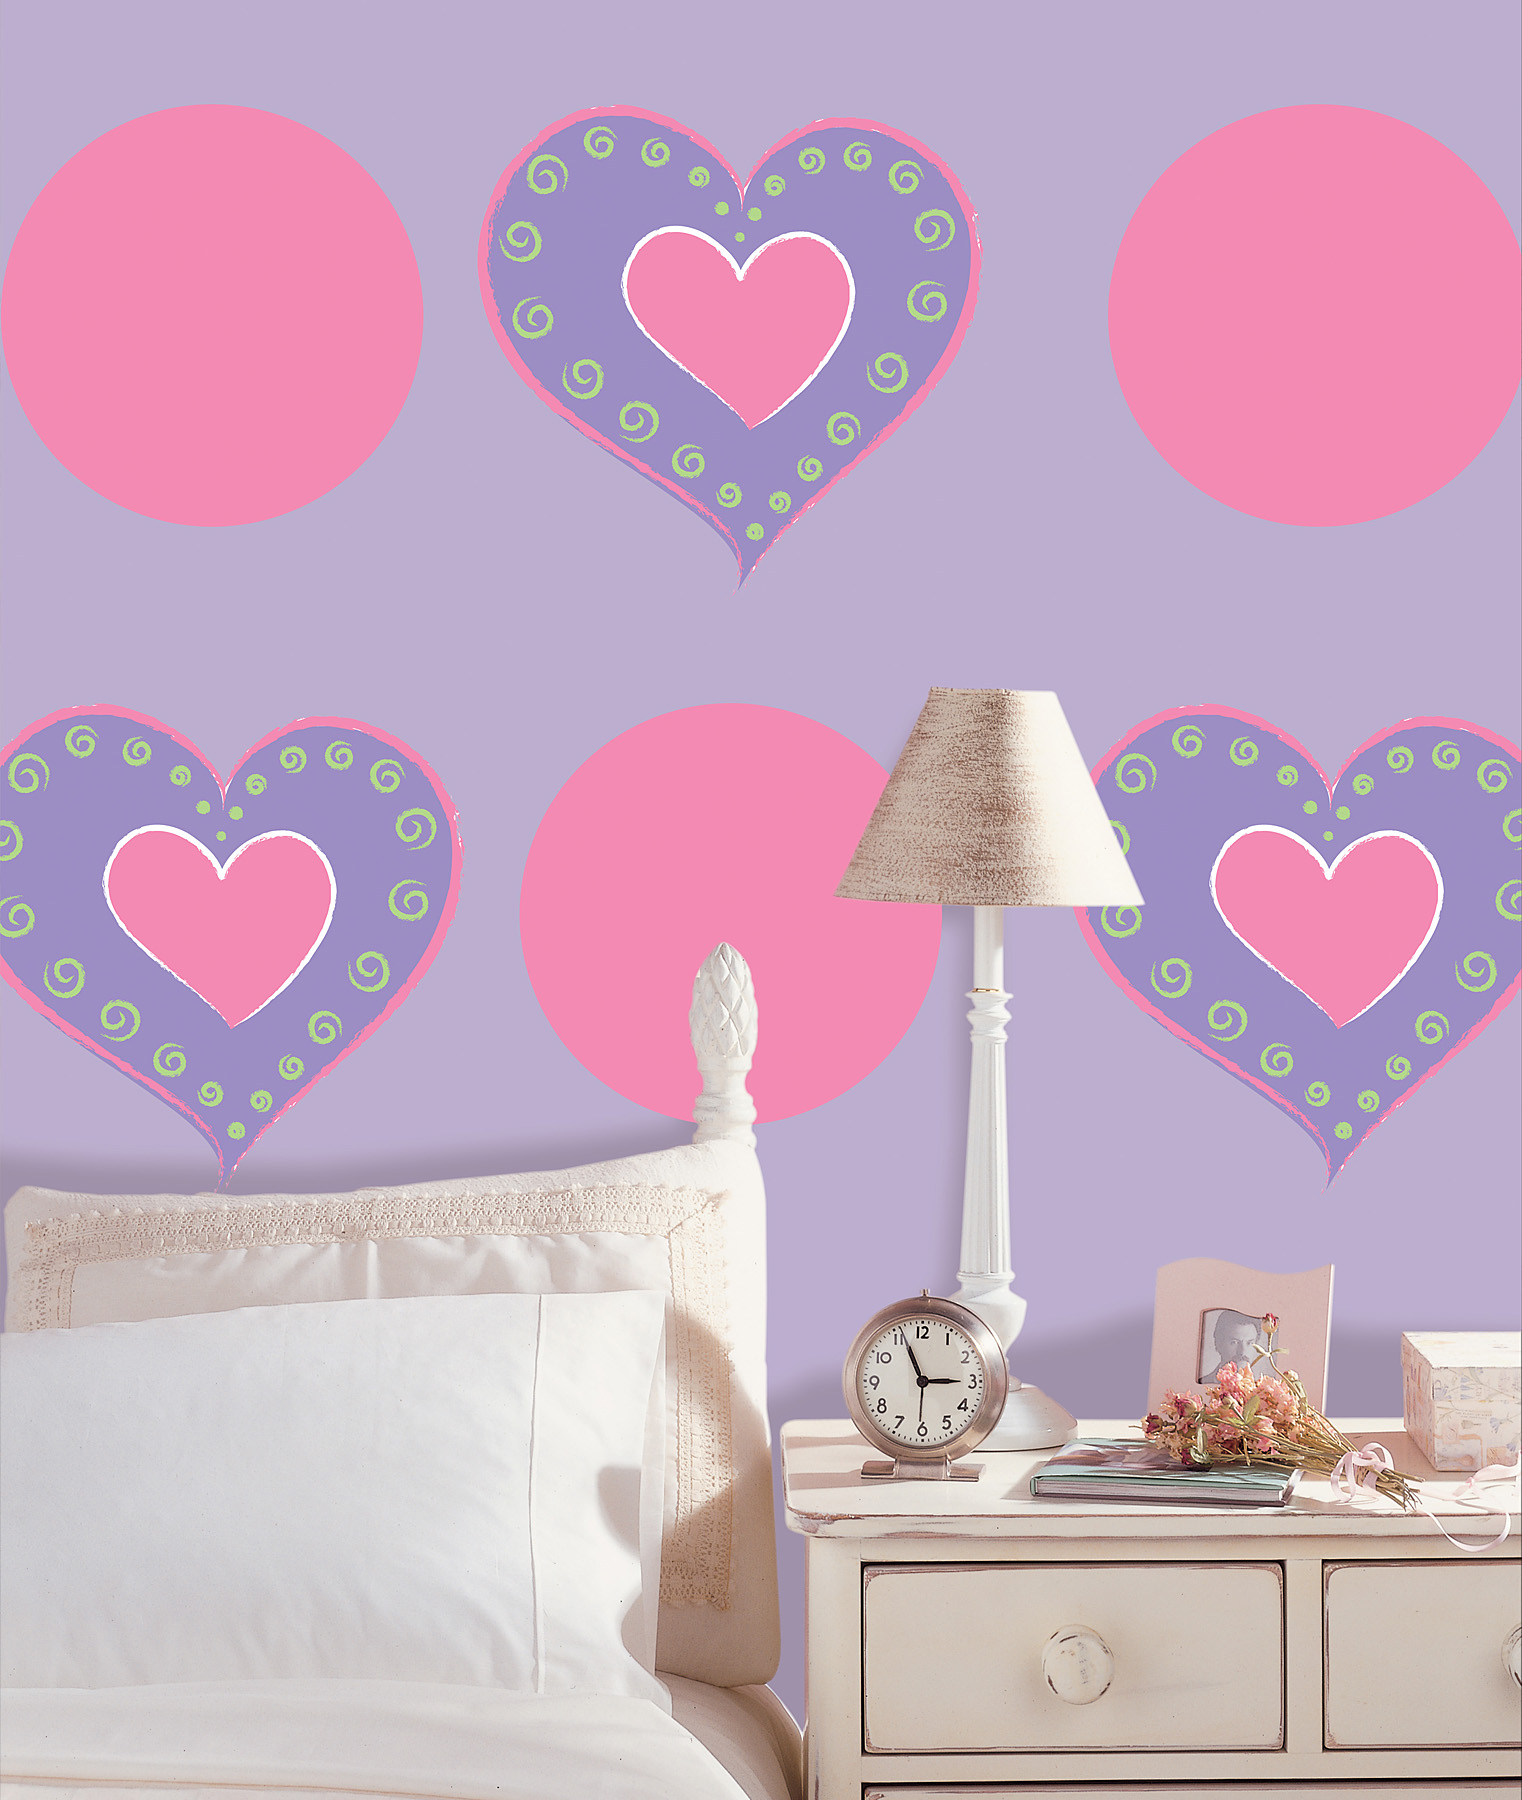 WallPops Hearts Wall Art for Valentines Day Idea